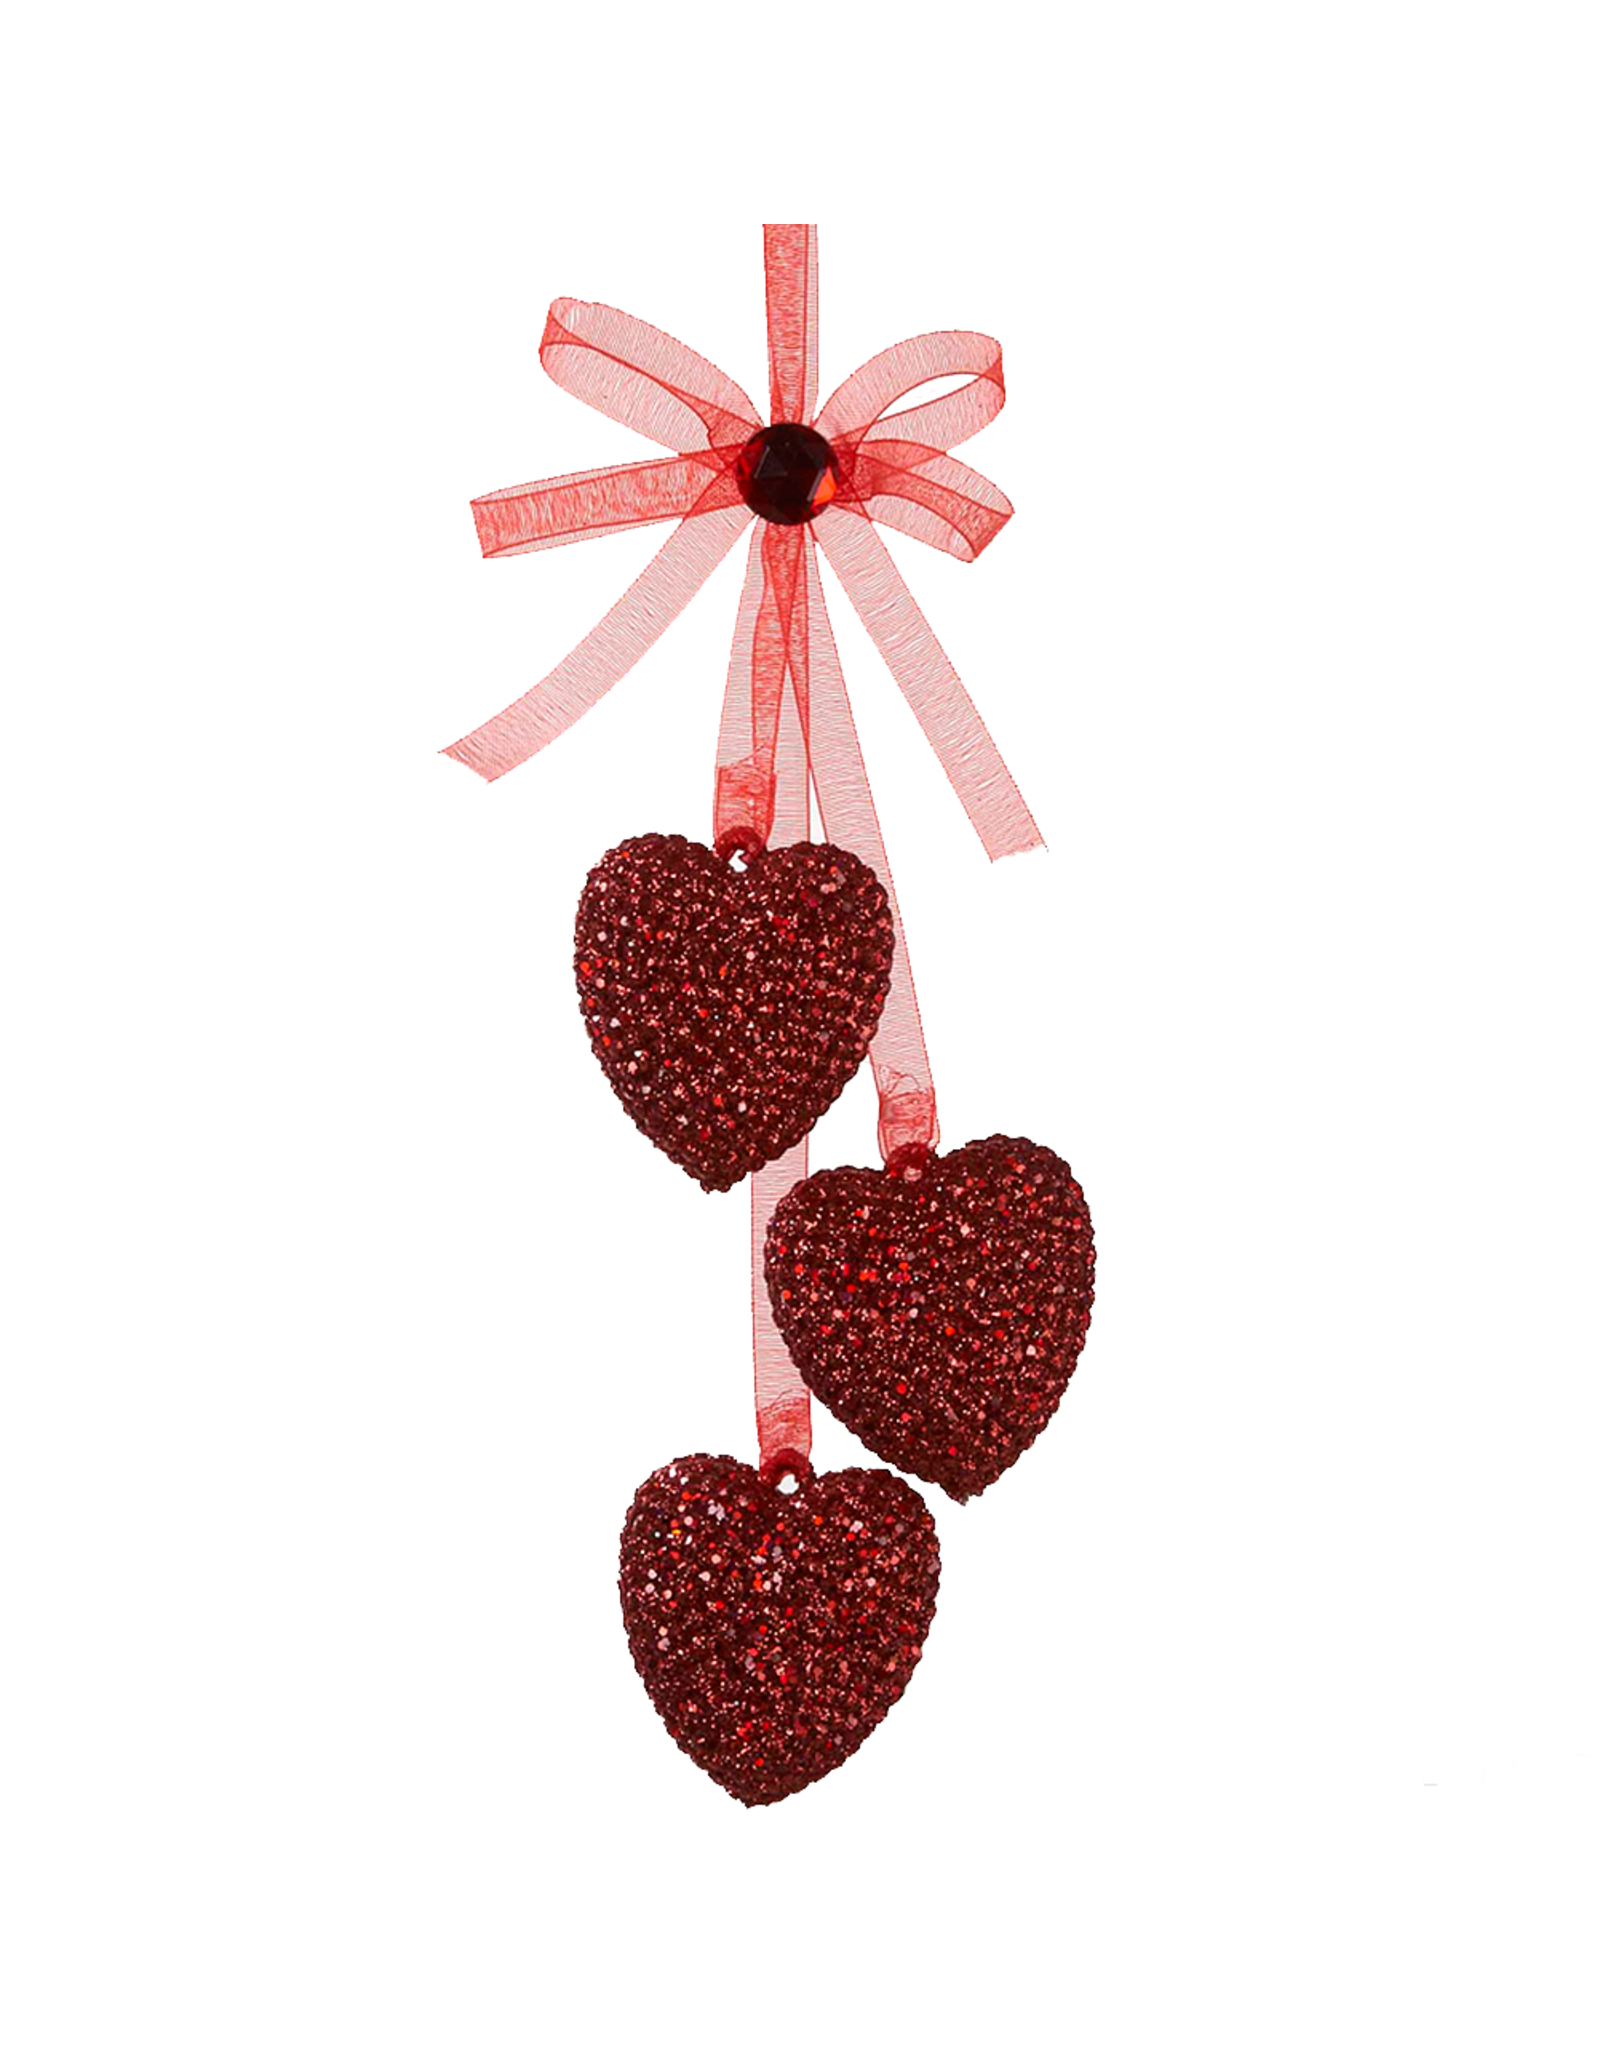 Kurt Adler Acrylic Red Glittered Triple Hearts Ornament w Bow